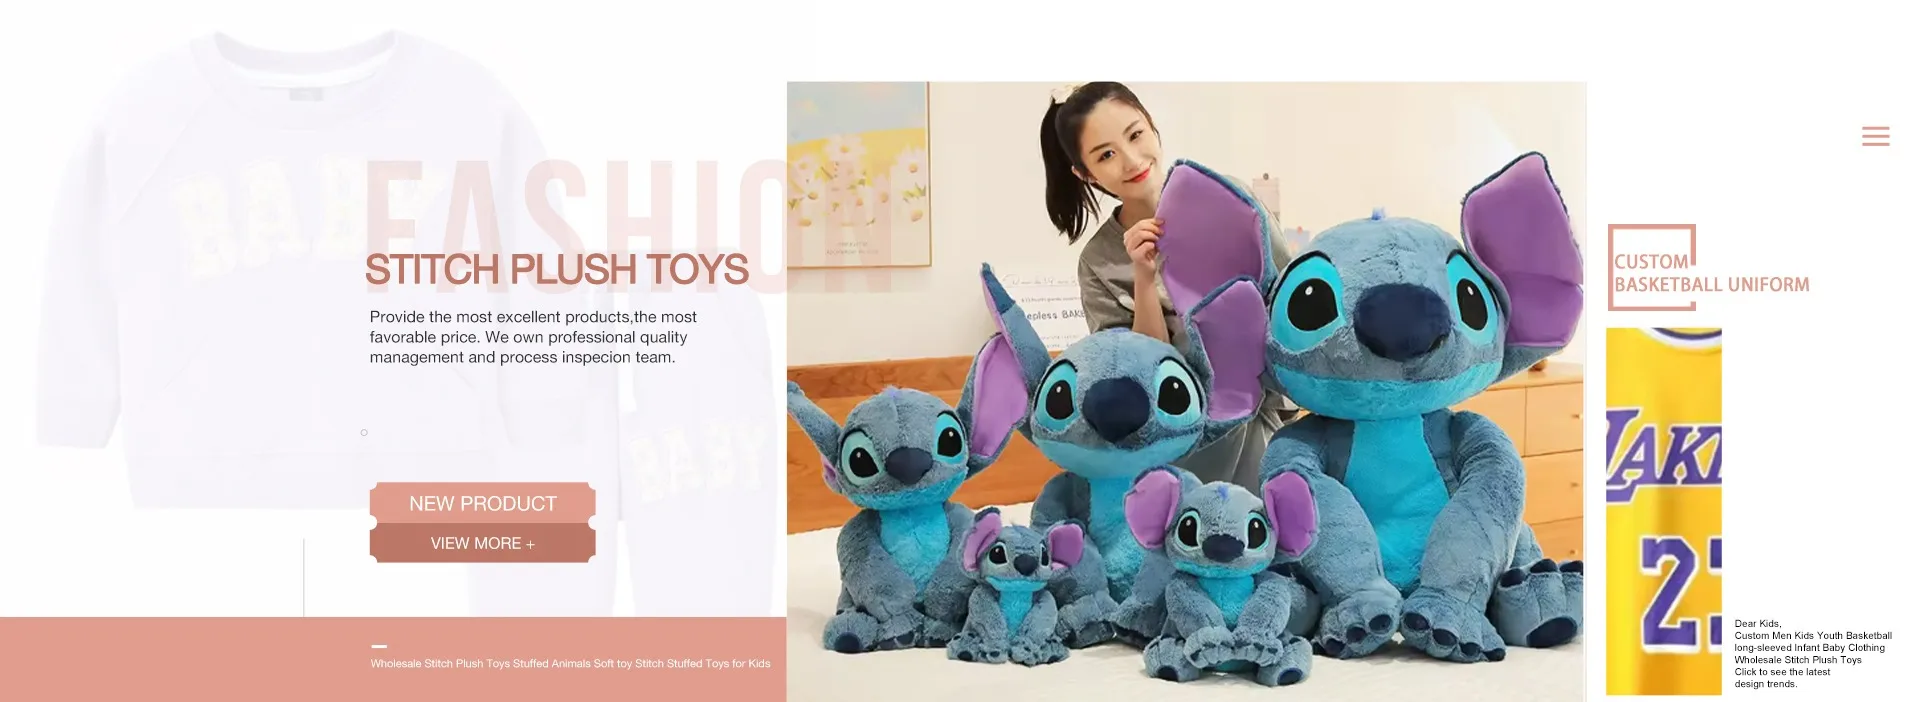 Wholesale Stitch Plush Toys Stuffed Animals Soft toy Stitch Stuffed Toys for Kids